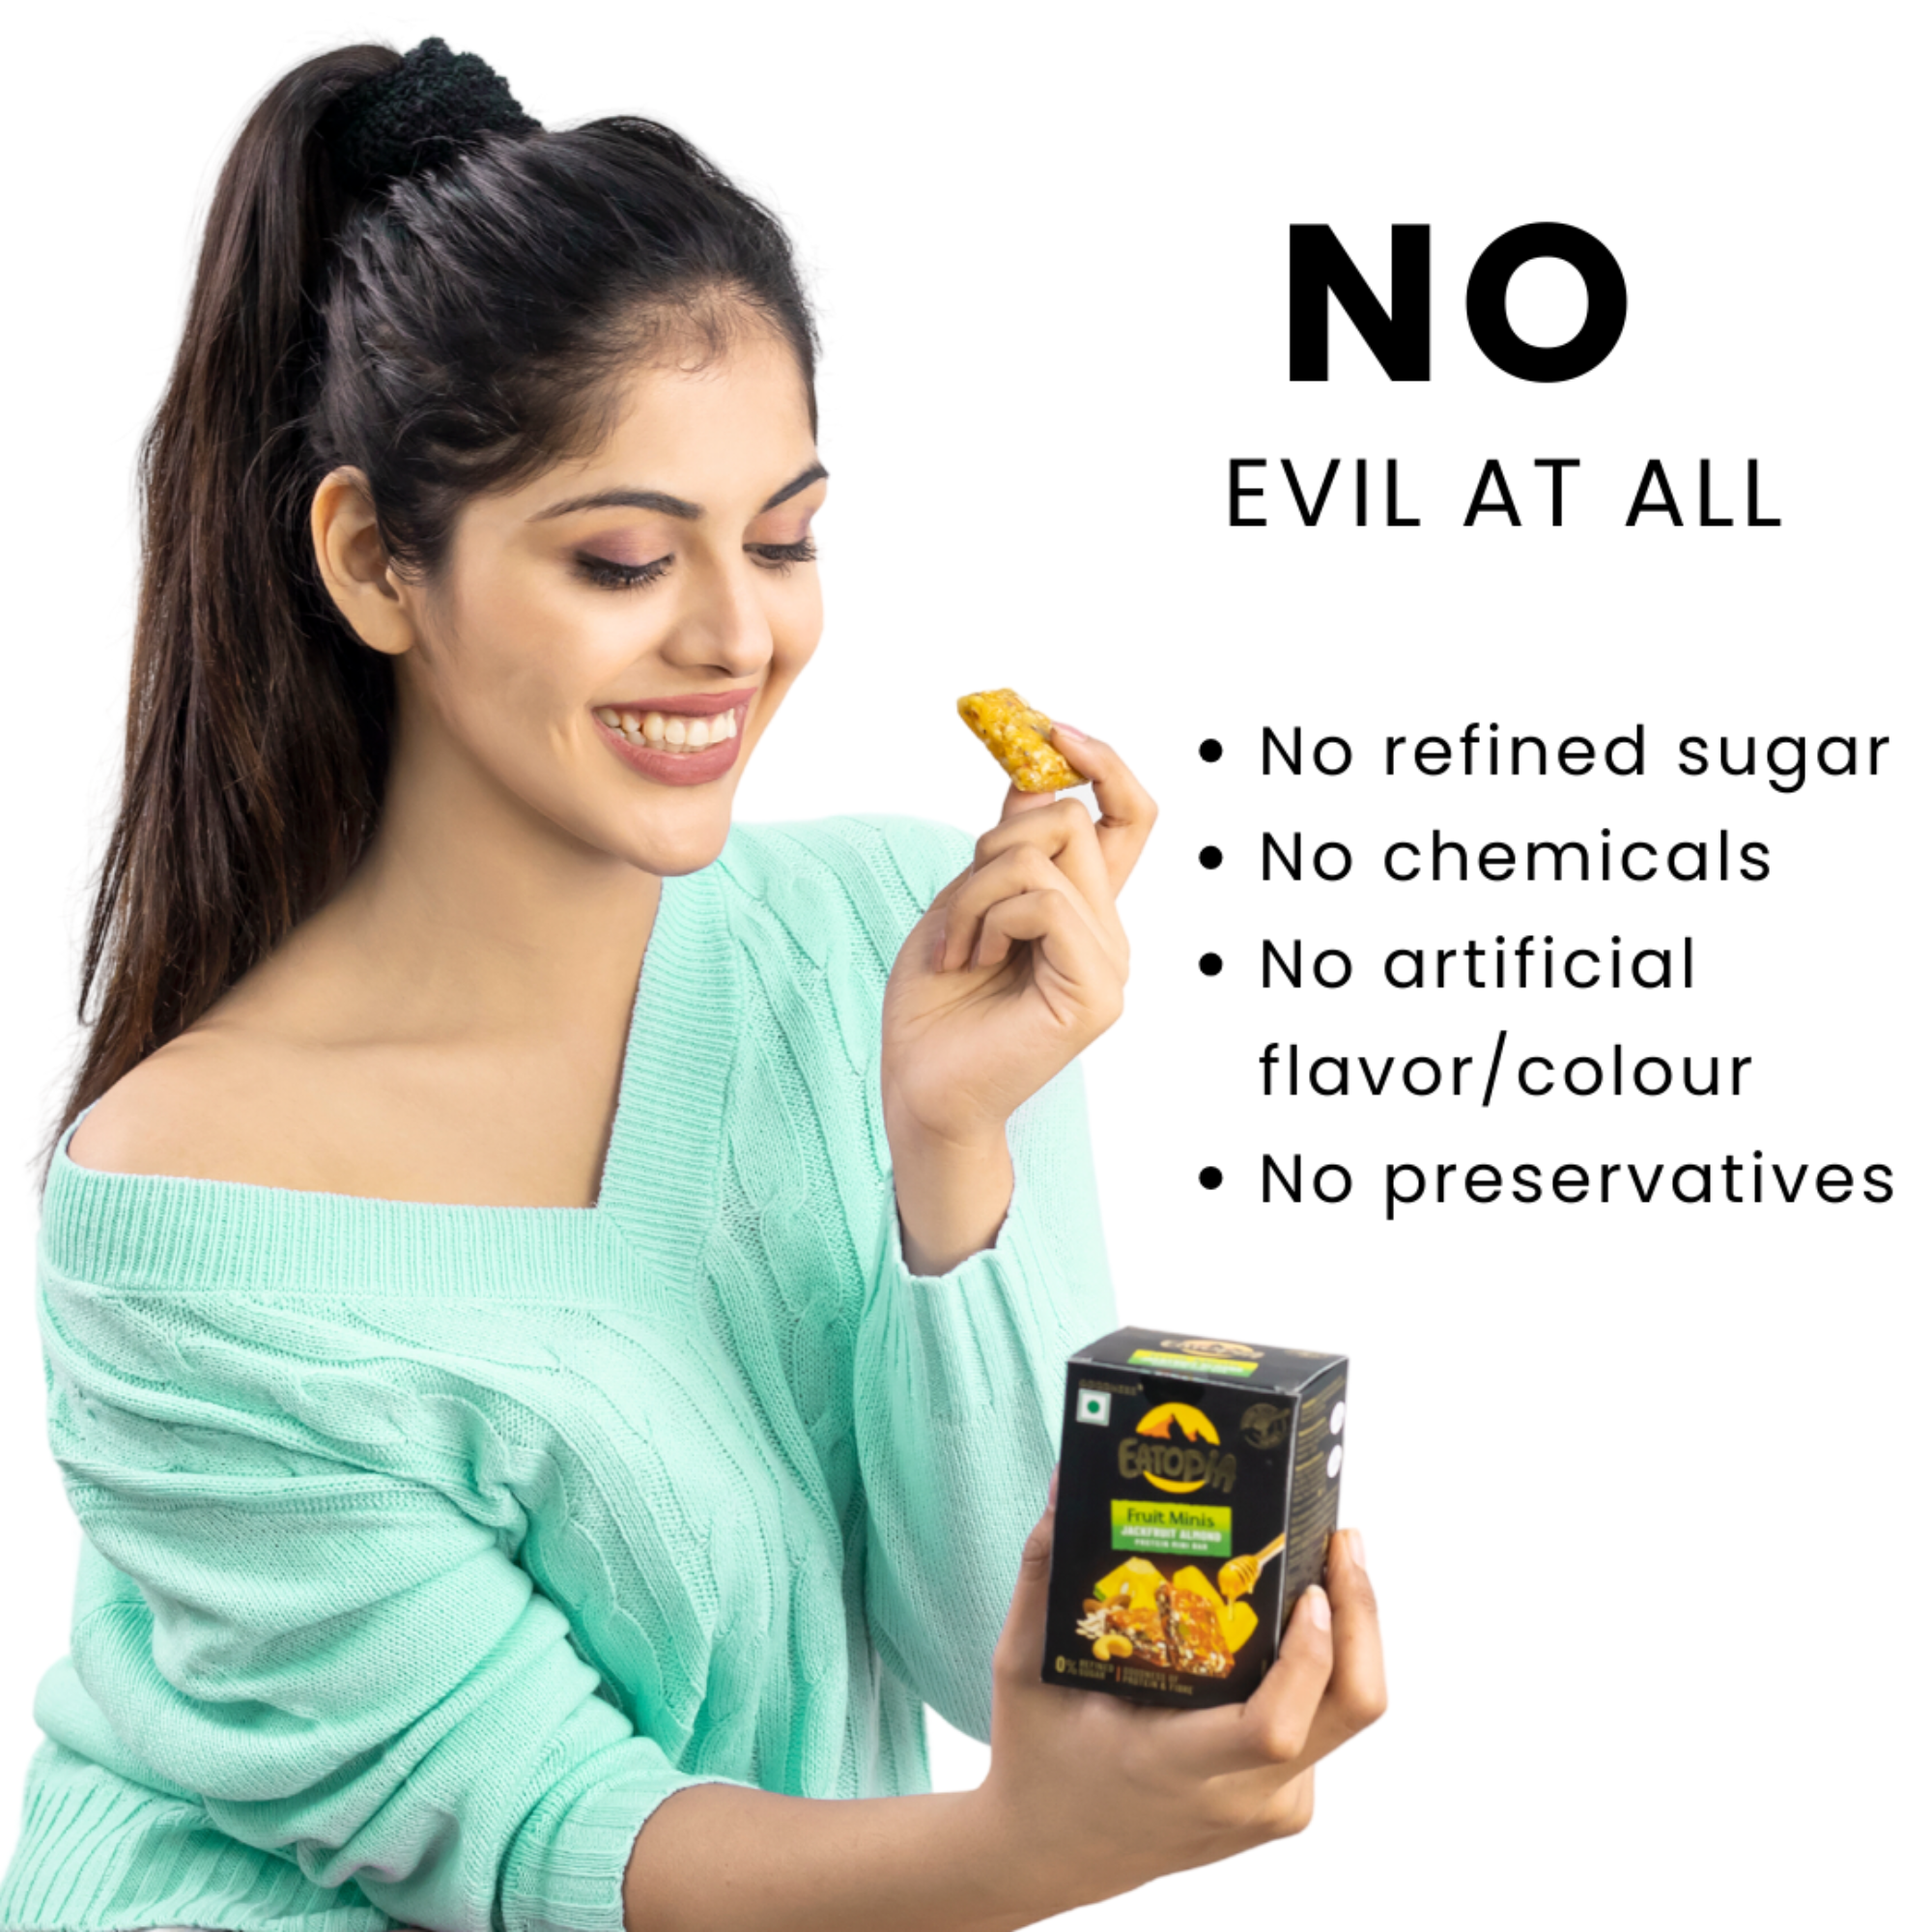 Eatopia superfruit Bites-Jackfruit Almond-(pack of 3)